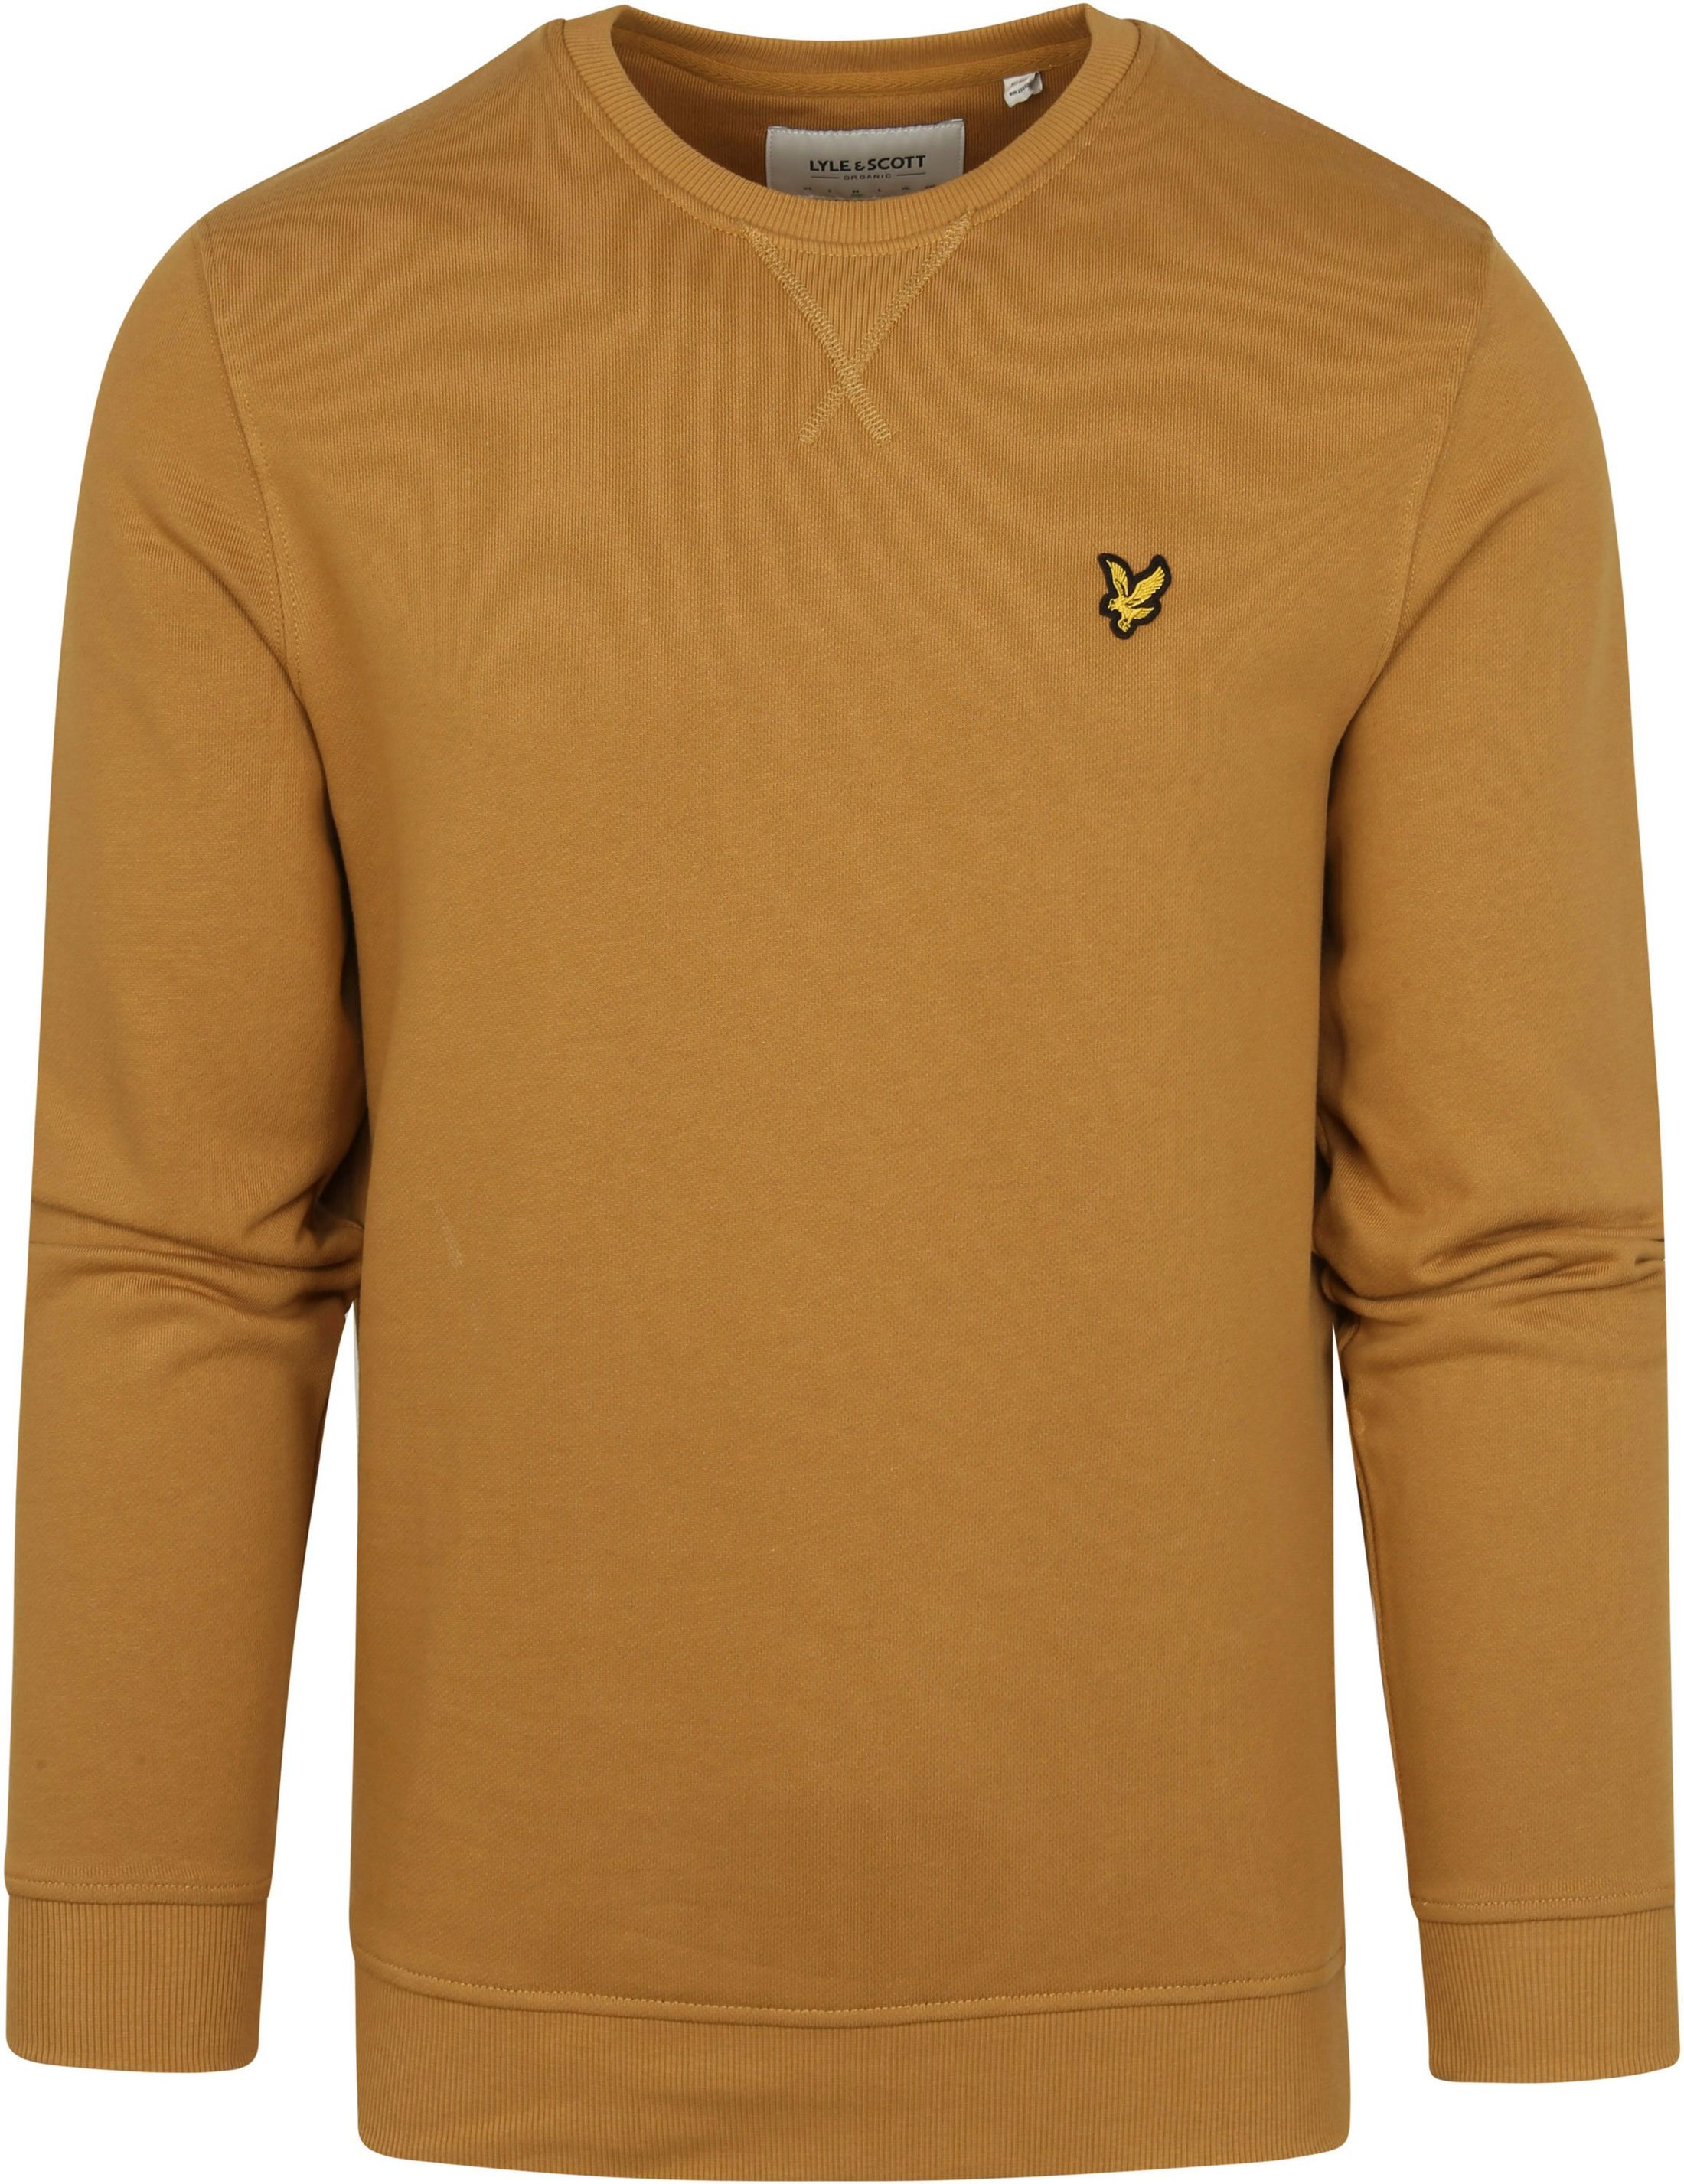 Lyle & Scott Sweater Ochre Yellow size L